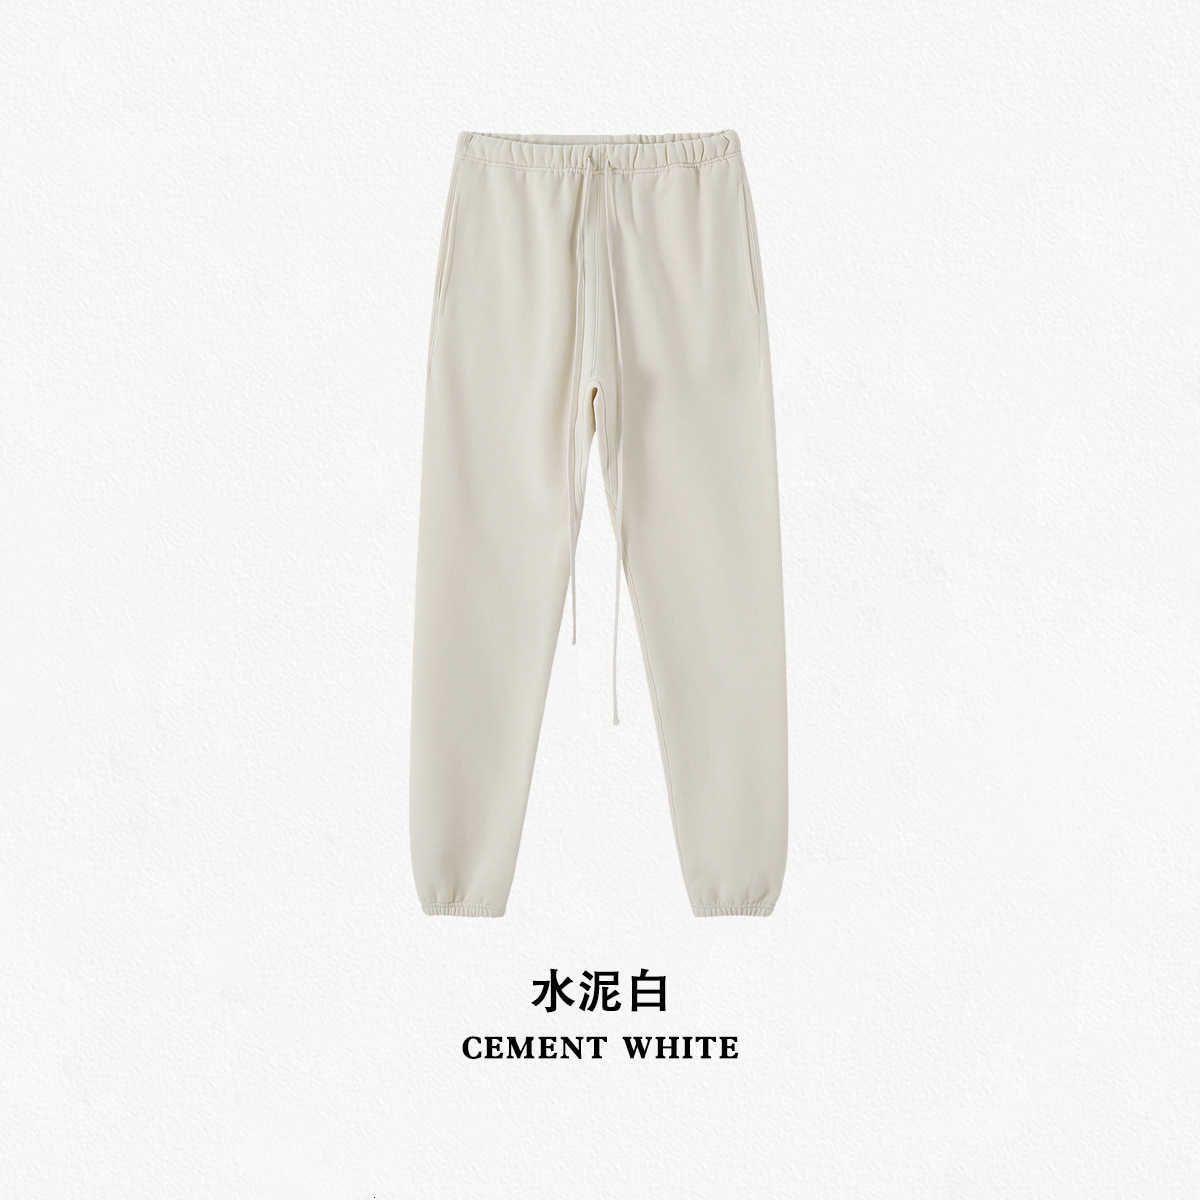 Cement White Pants